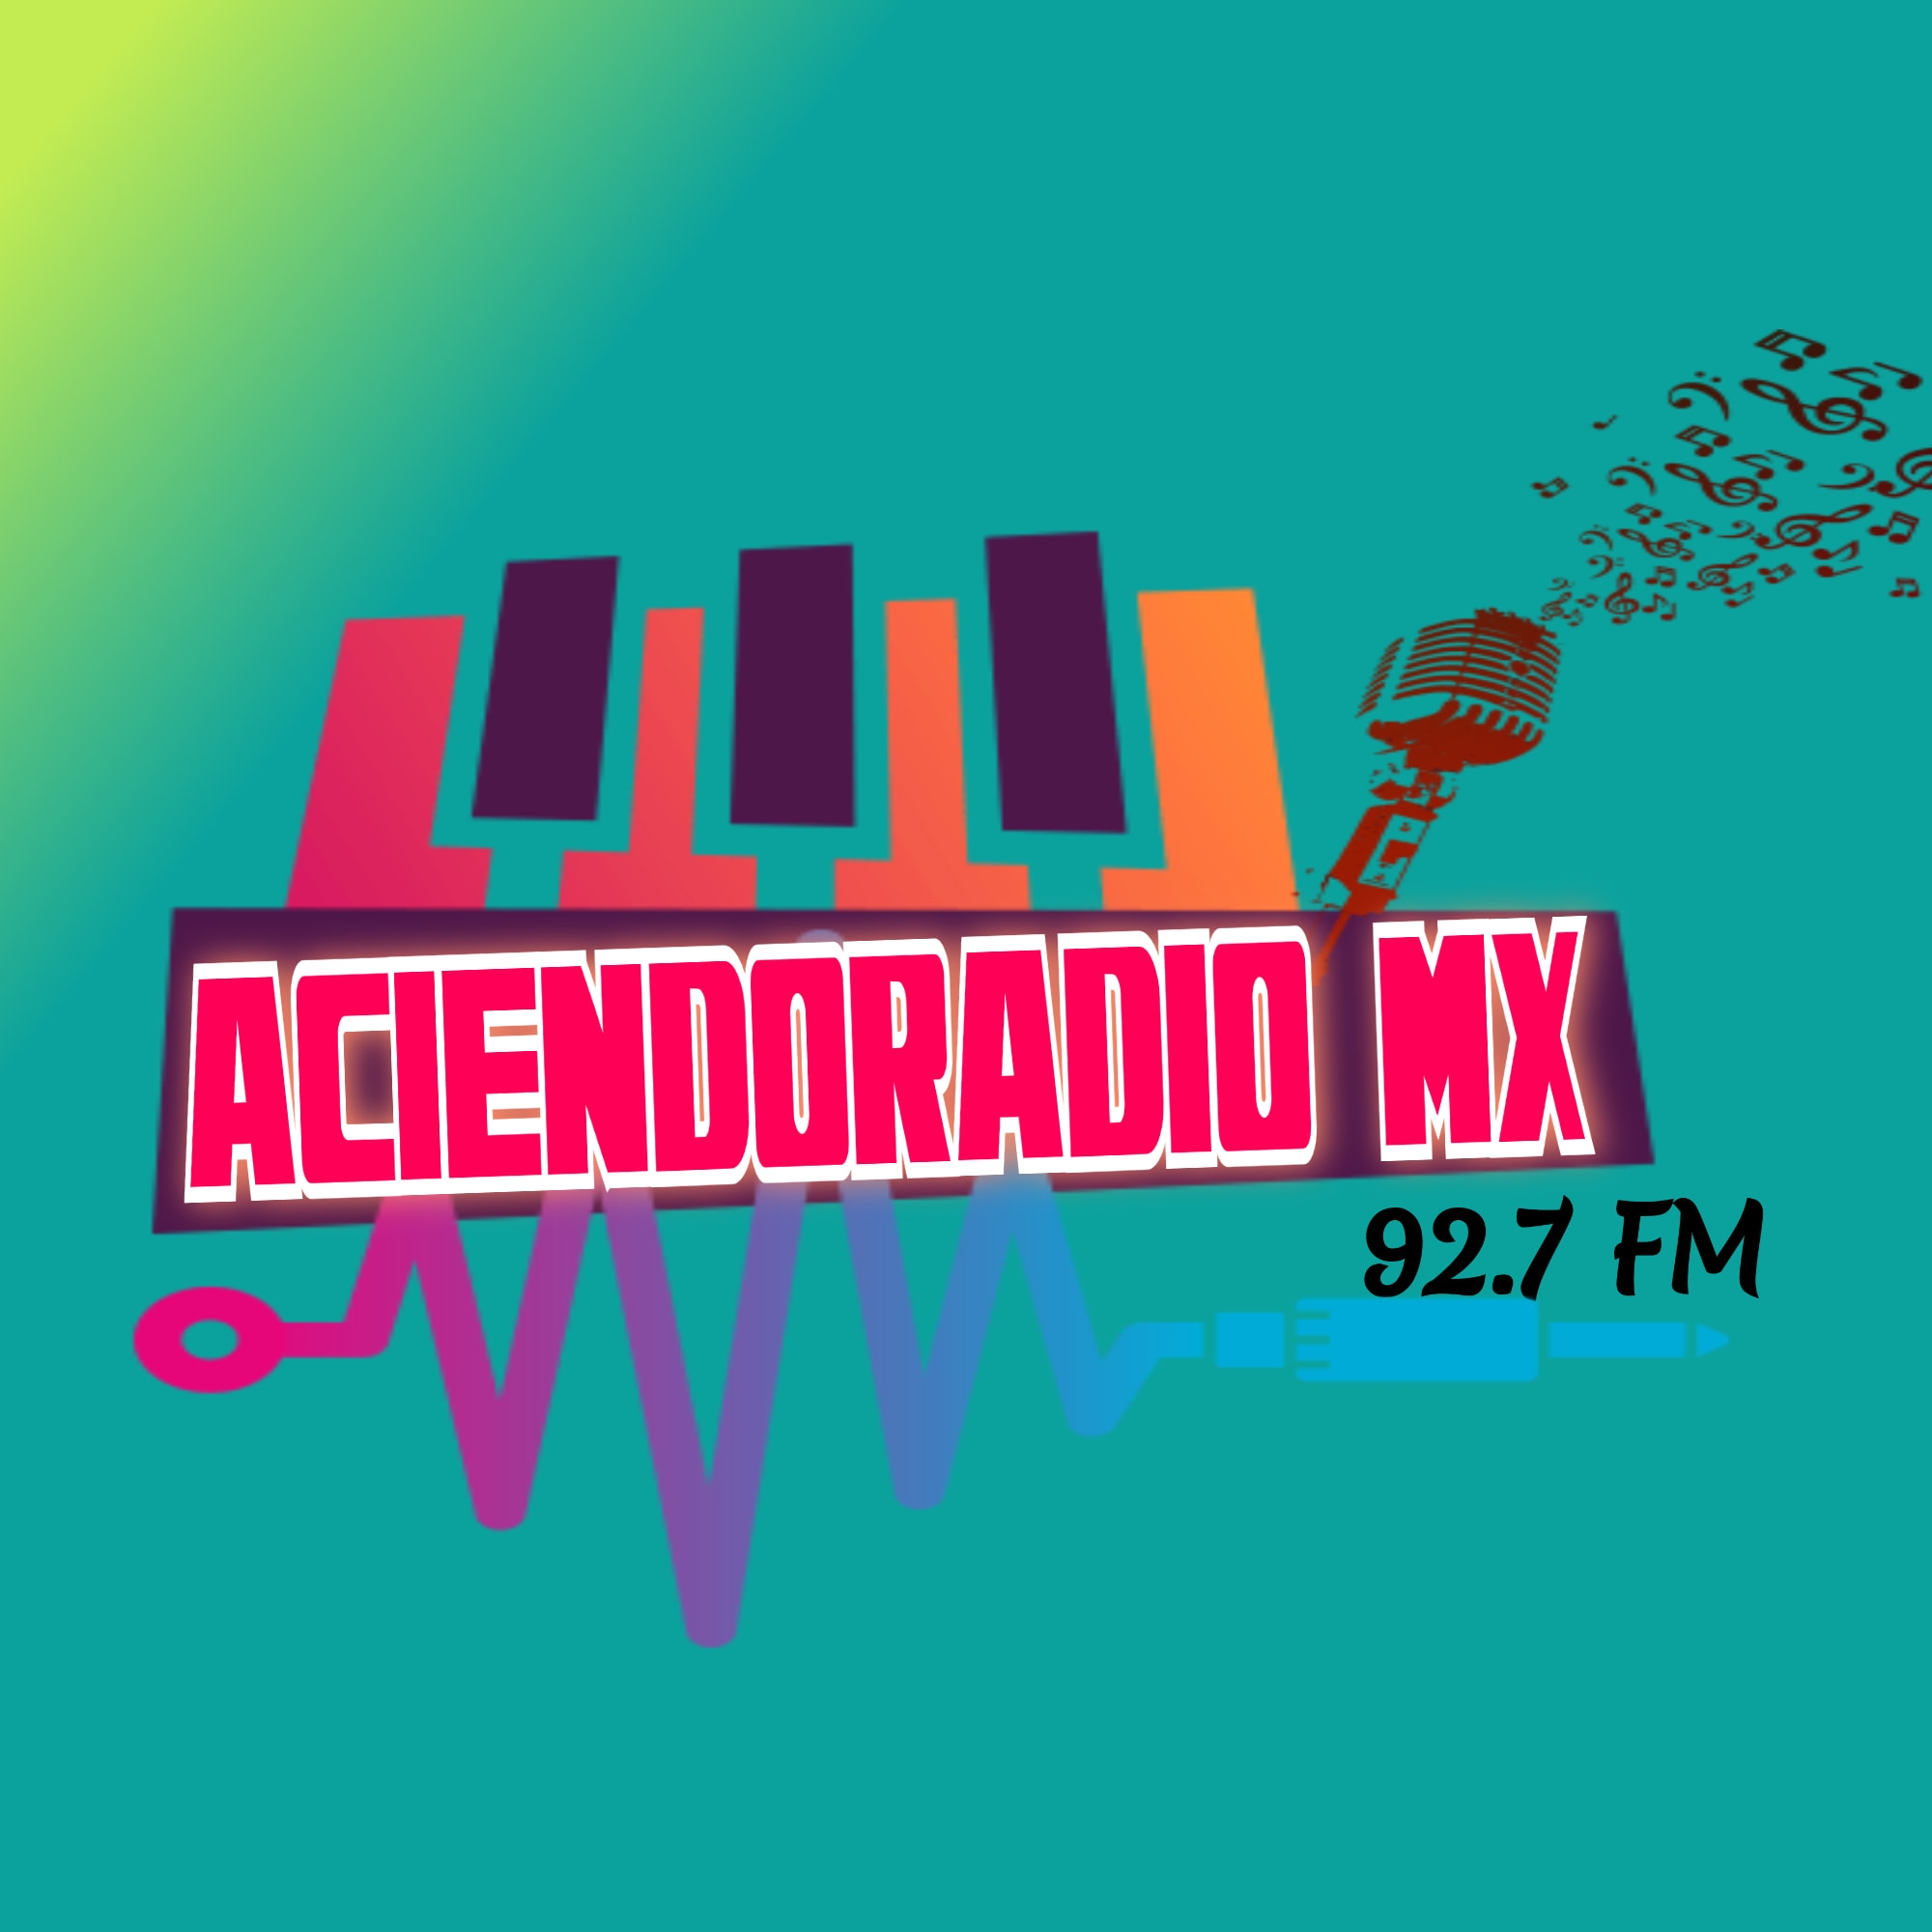 Radio Zitlaltepec MX